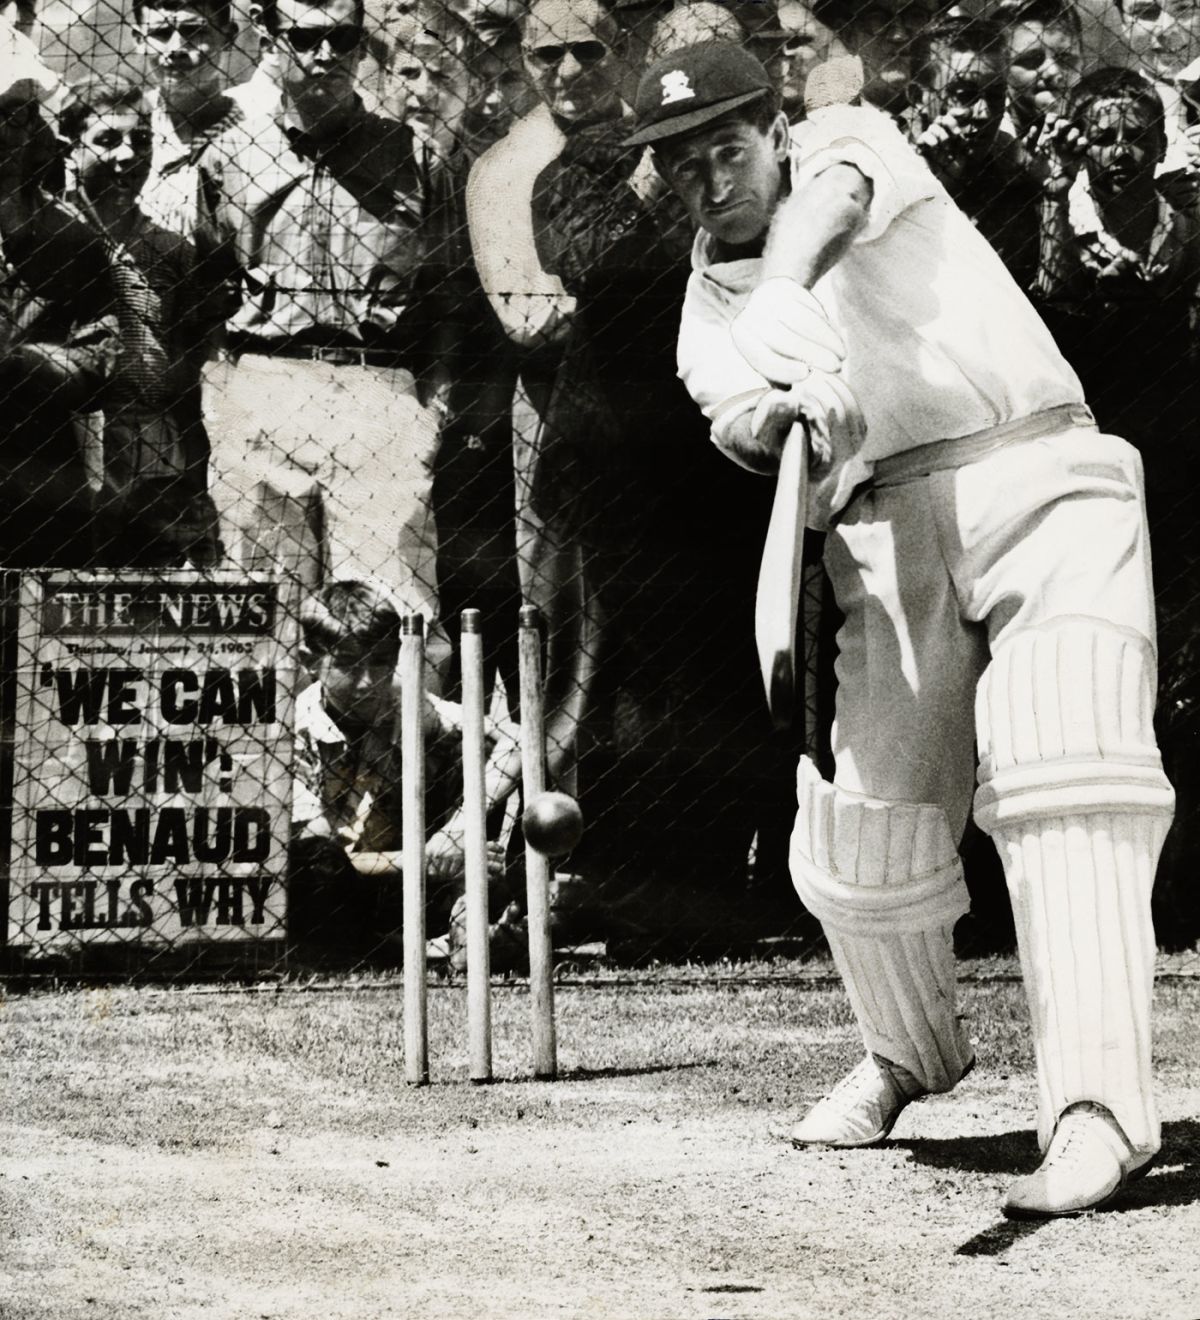 Spectators at Adelaide Oval watch Ken Barrington bat in the nets, January 24, 1963